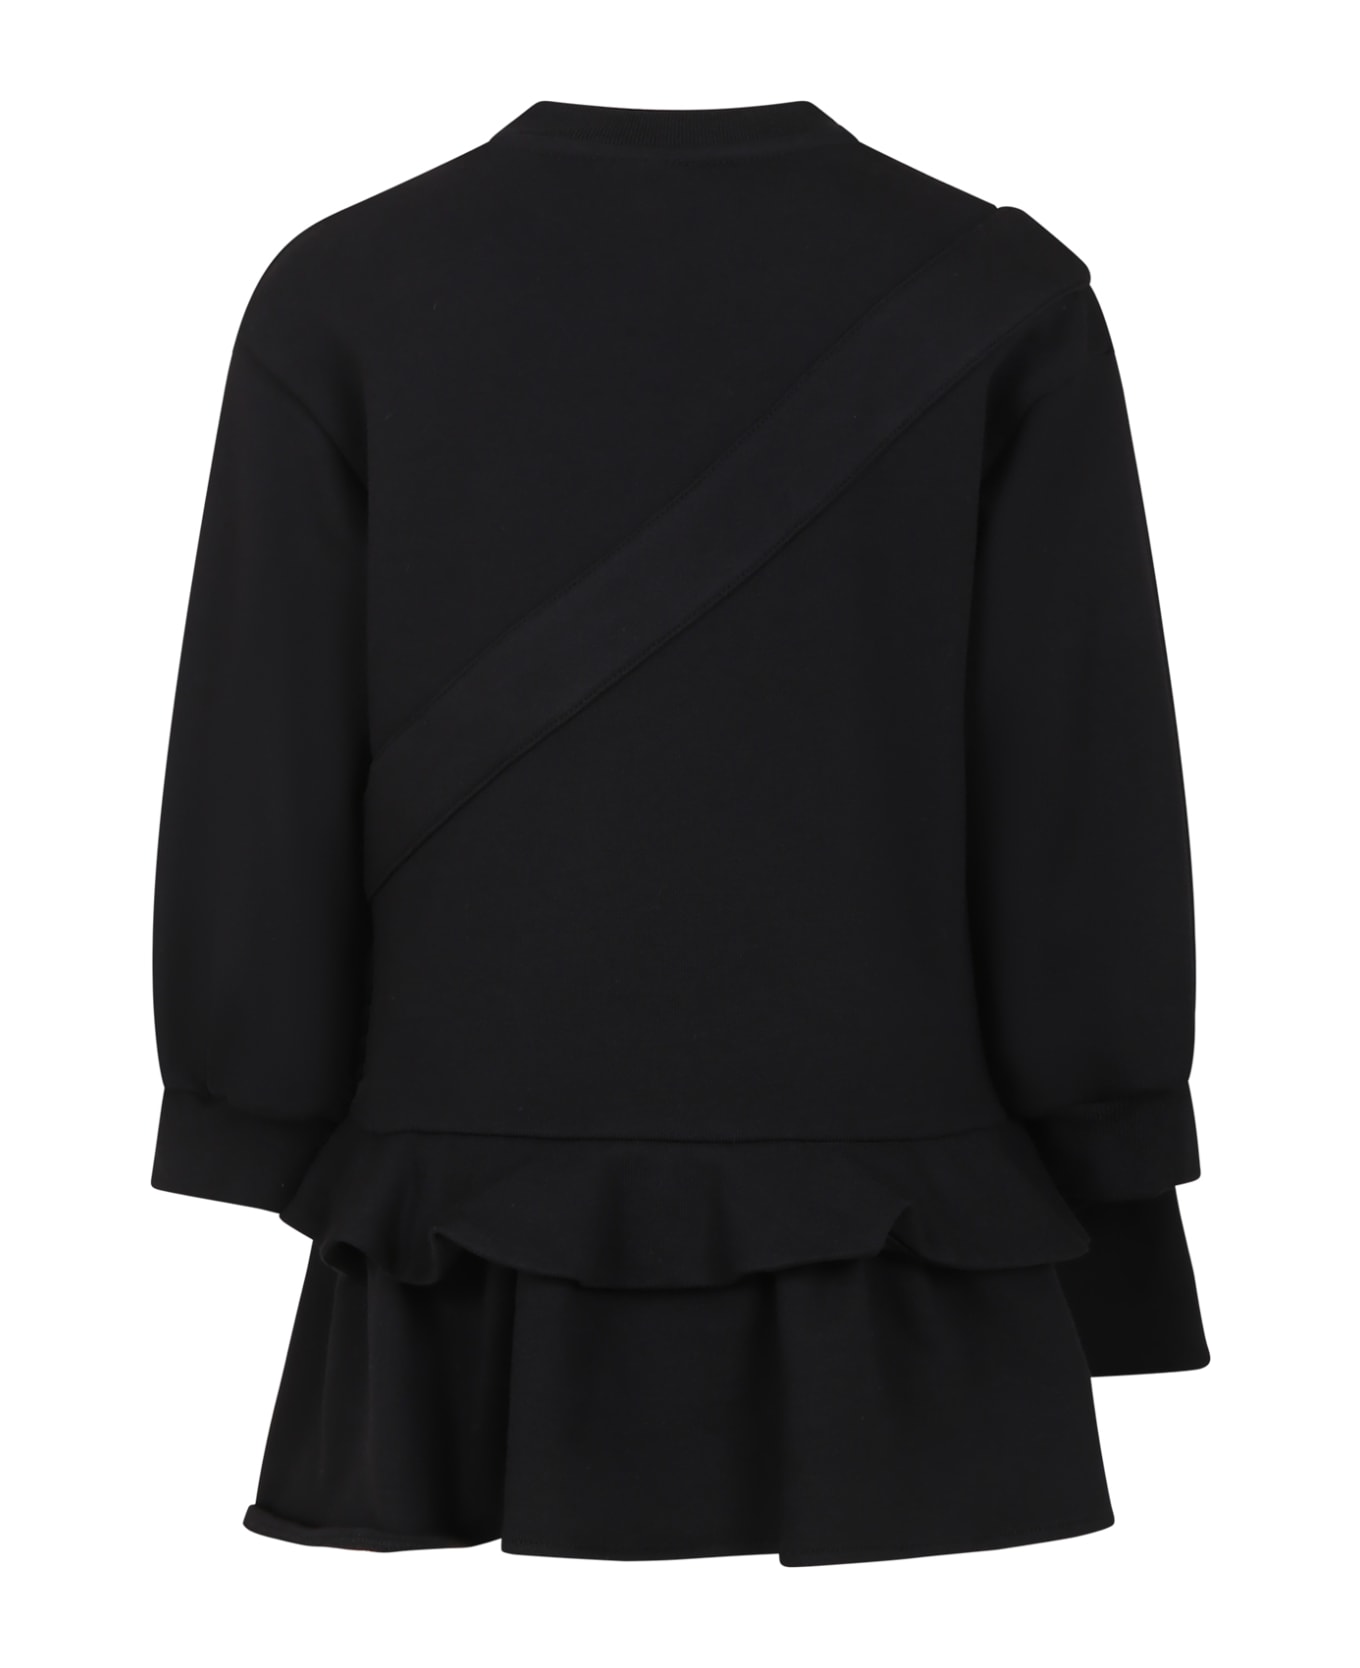 Fendi Black Casual Dress With Baguette For Girl - Black